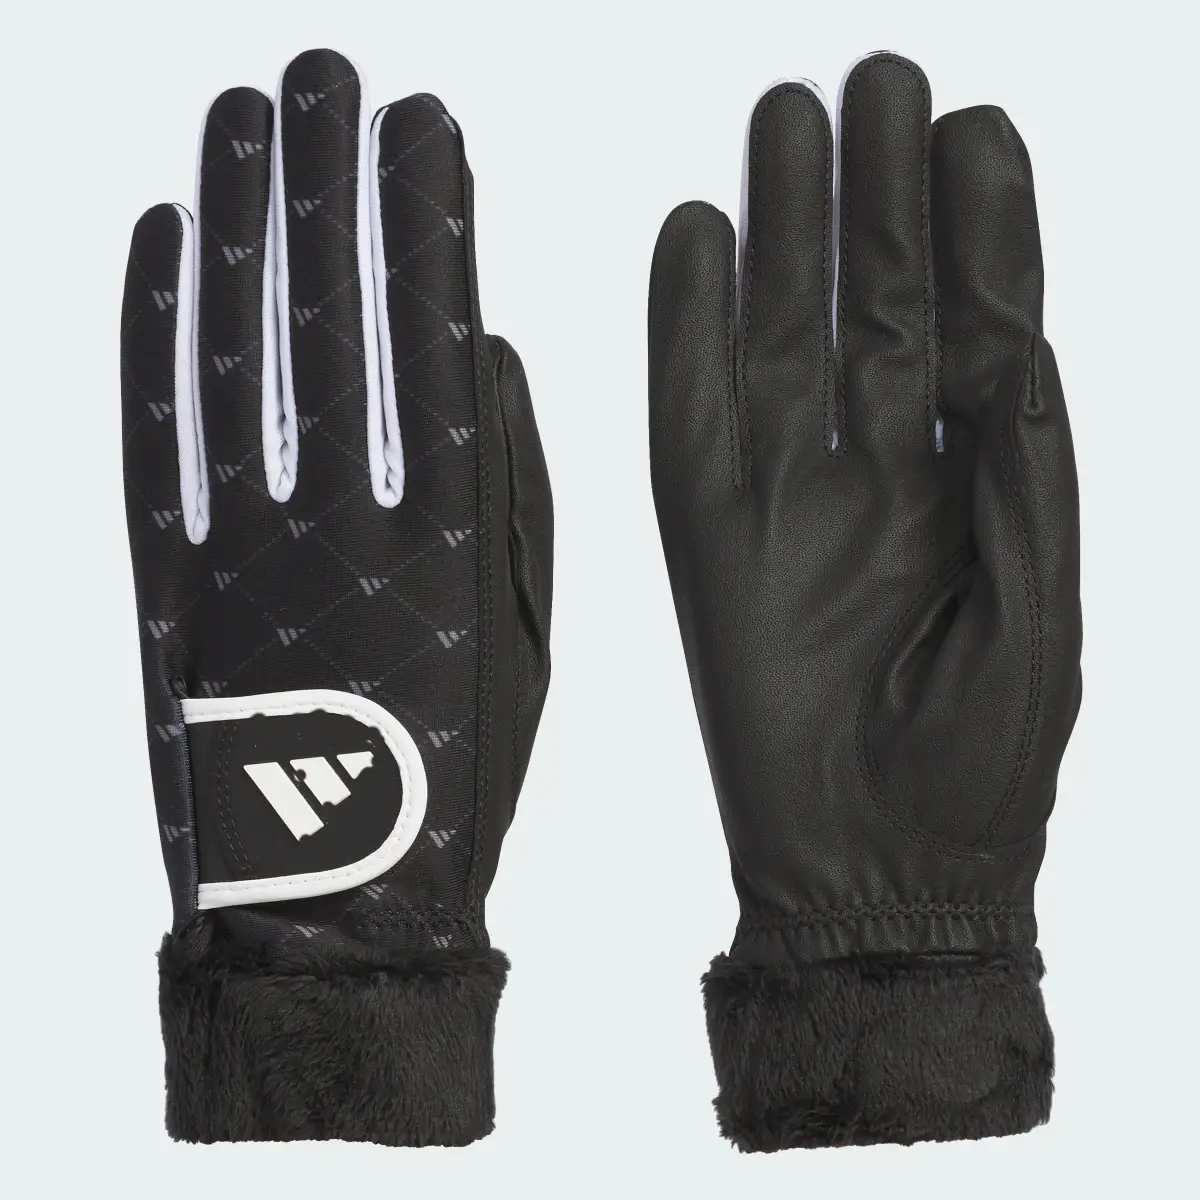 Adidas Warm Comfort Graphic Gloves. 2